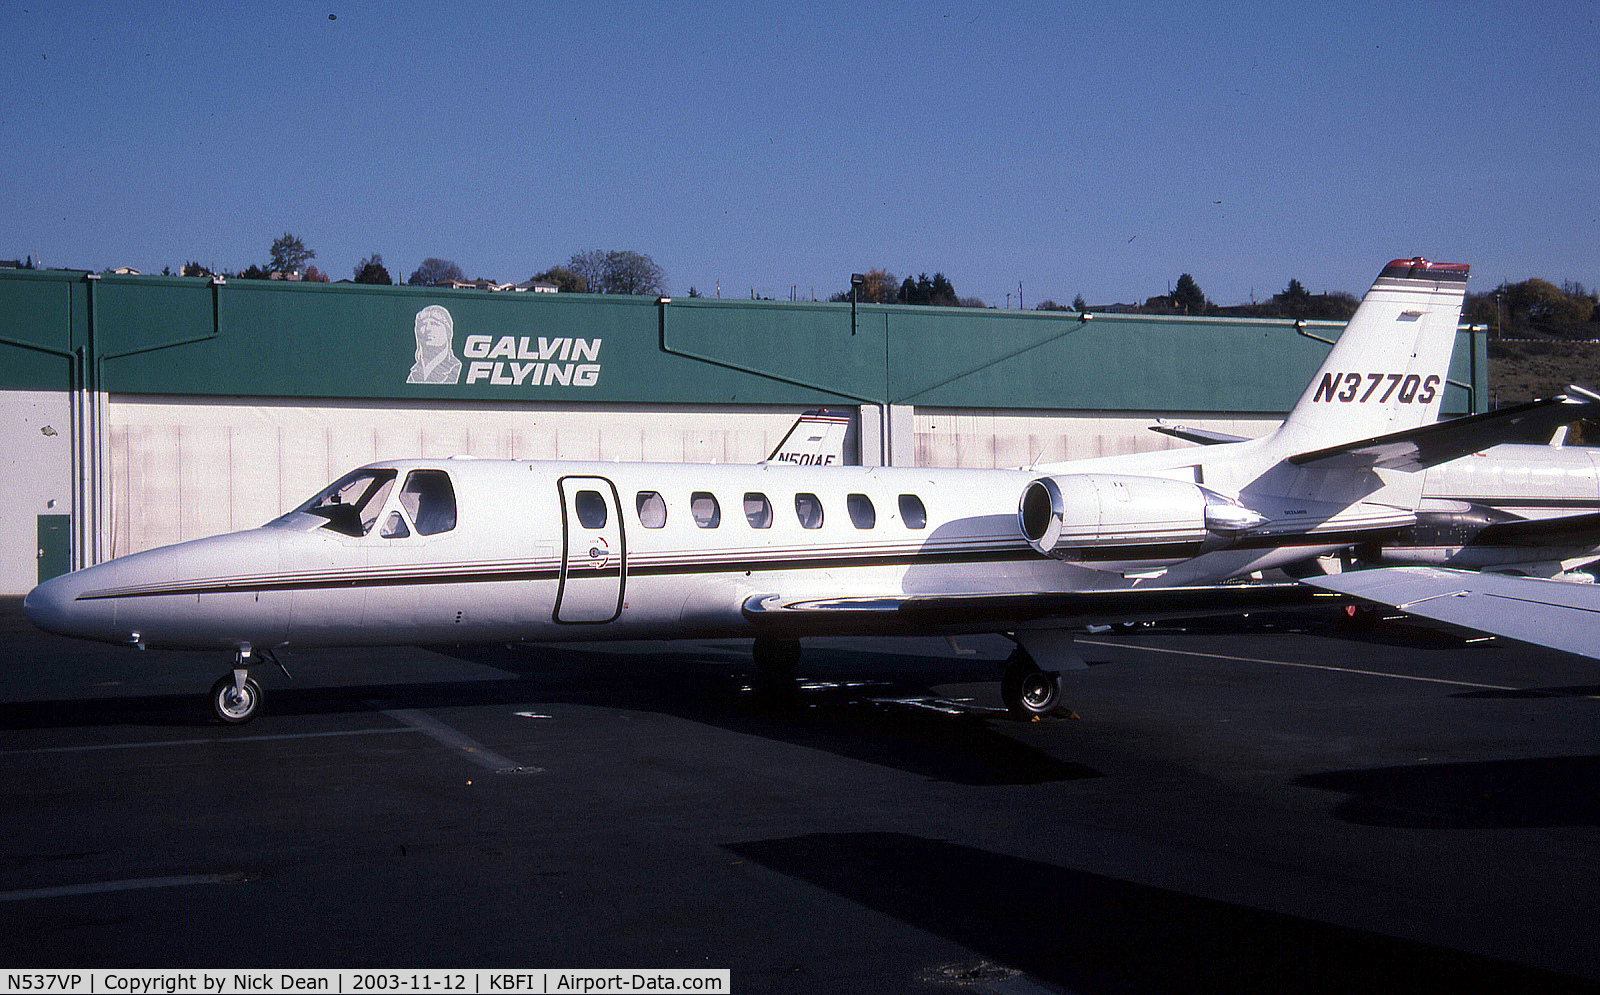 N537VP, 1996 Cessna 560 Citation Ultra C/N 560-0377, KBFI (Seen here as N377QS this airframe is now registered N537VP as posted)